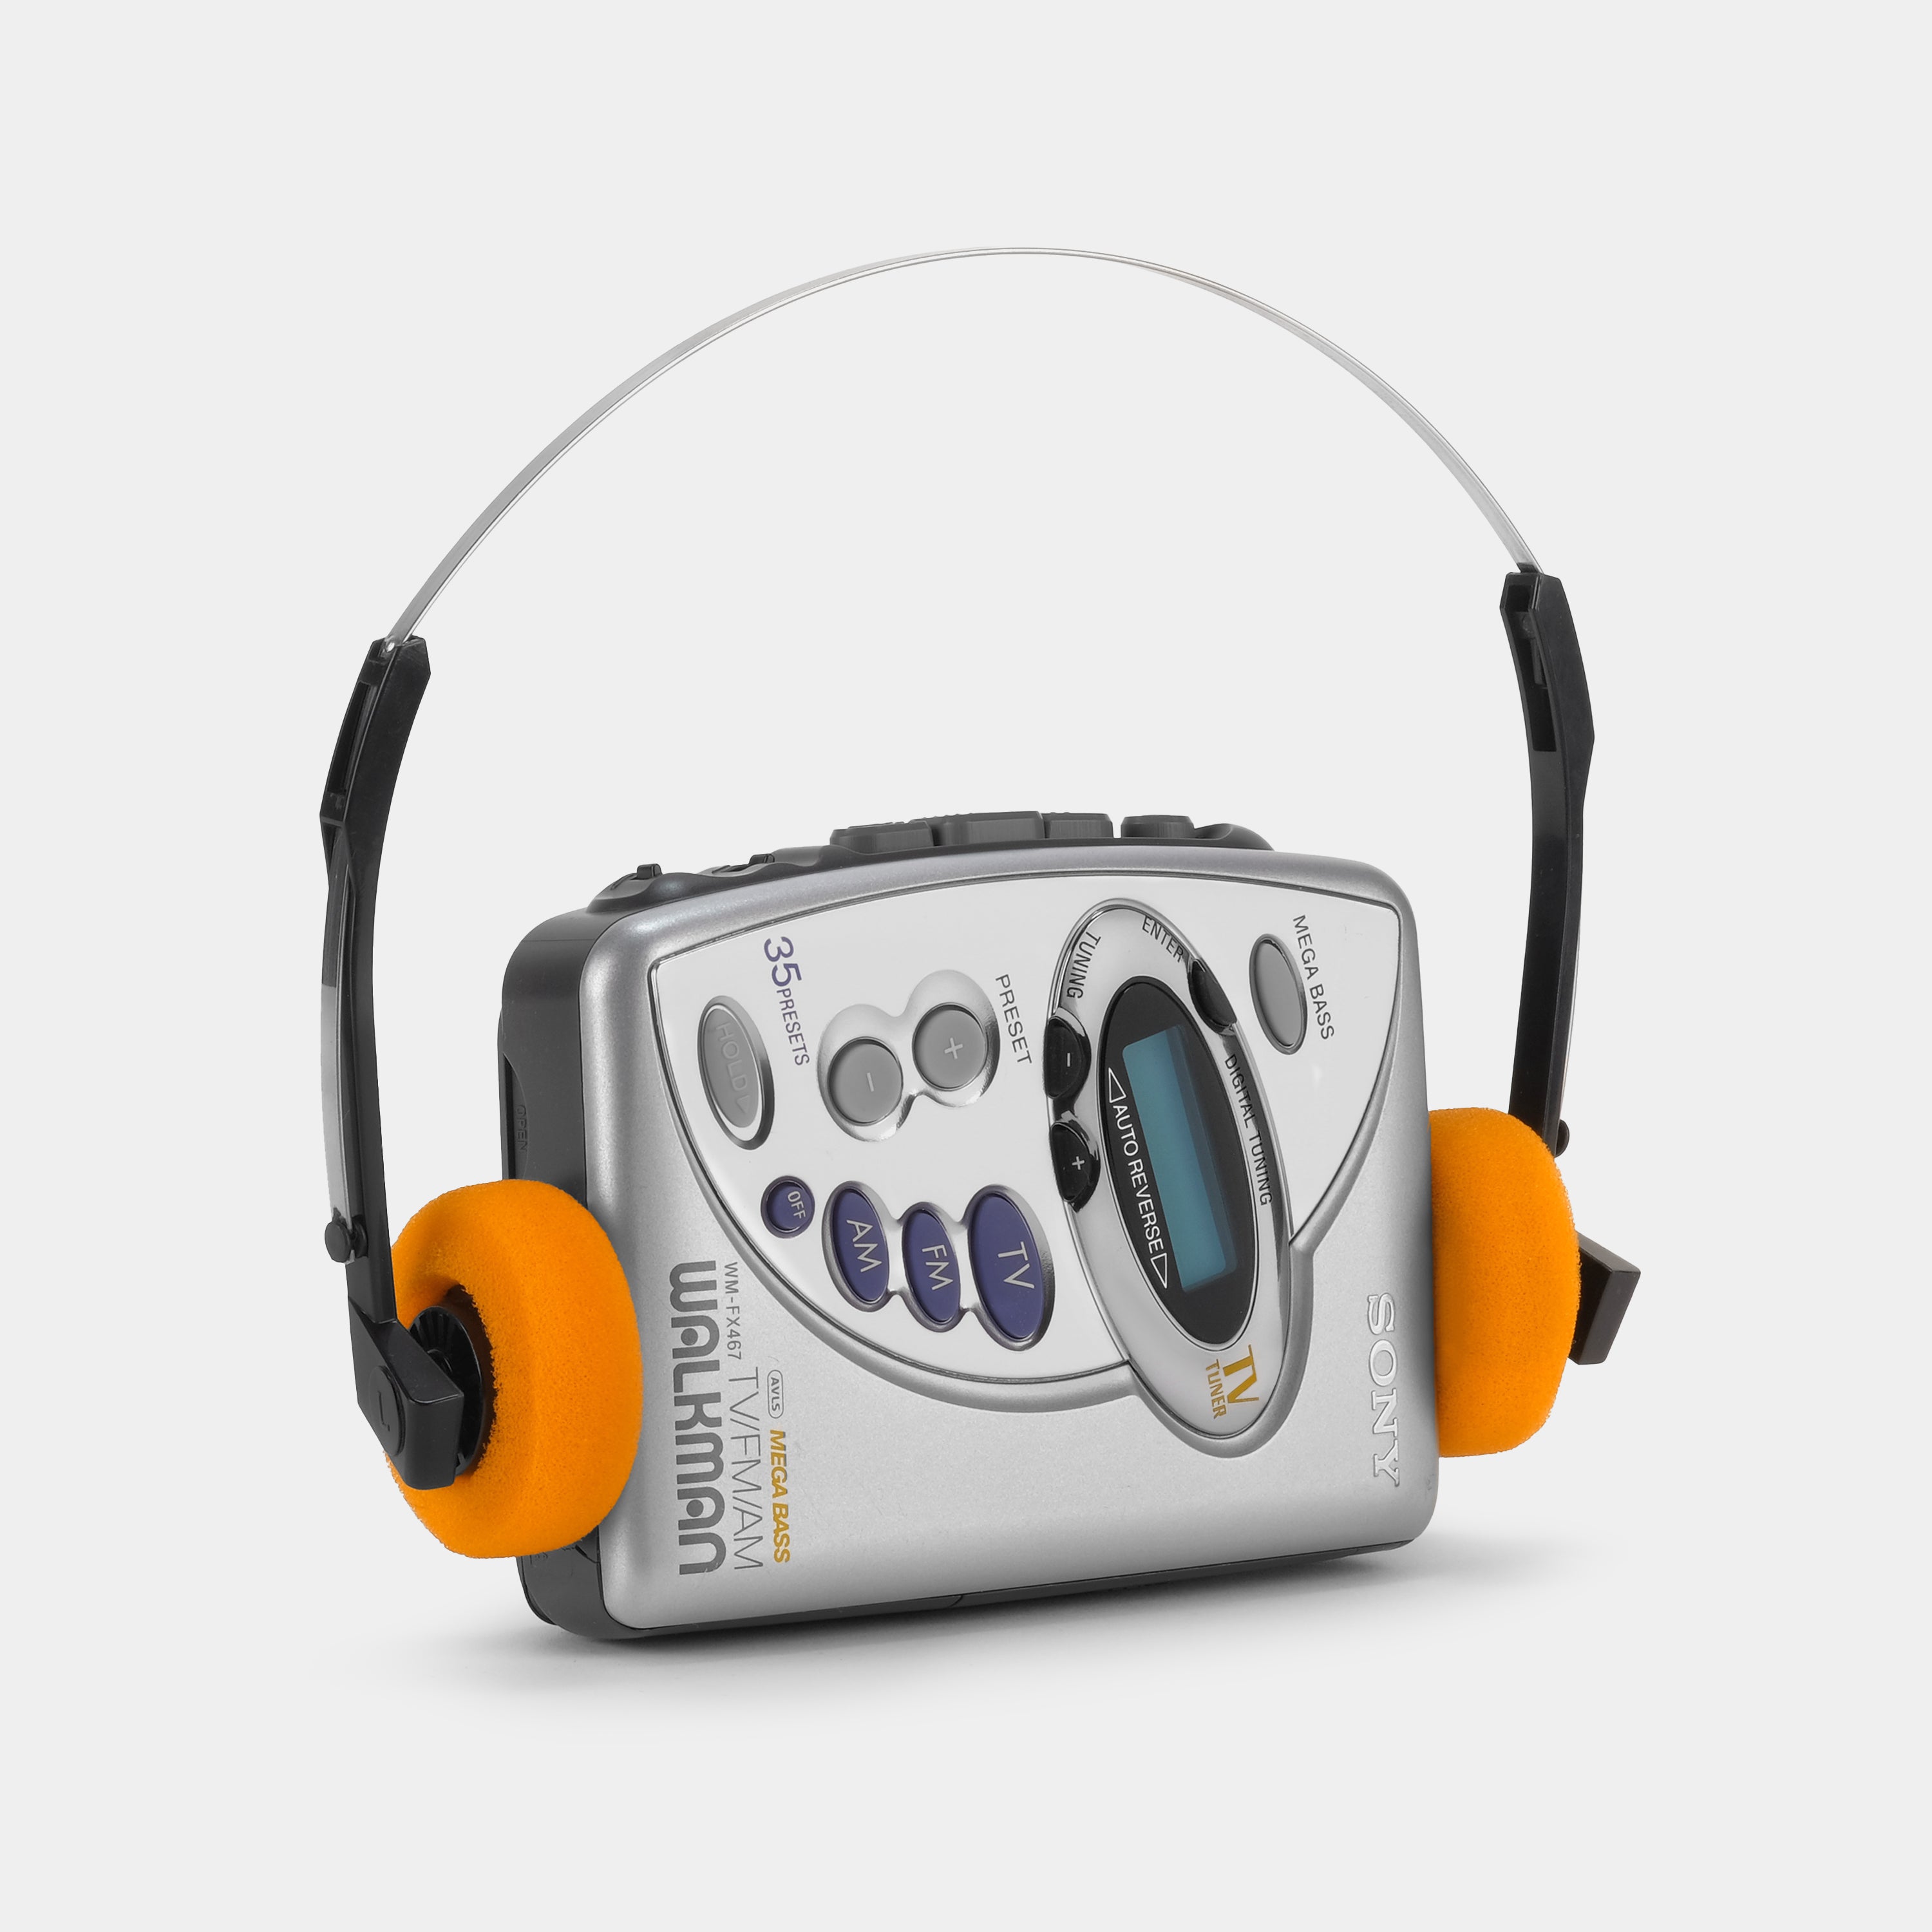 Sony Walkman WM-FX467 Auto Reverse AM/FM Portable Cassette Player